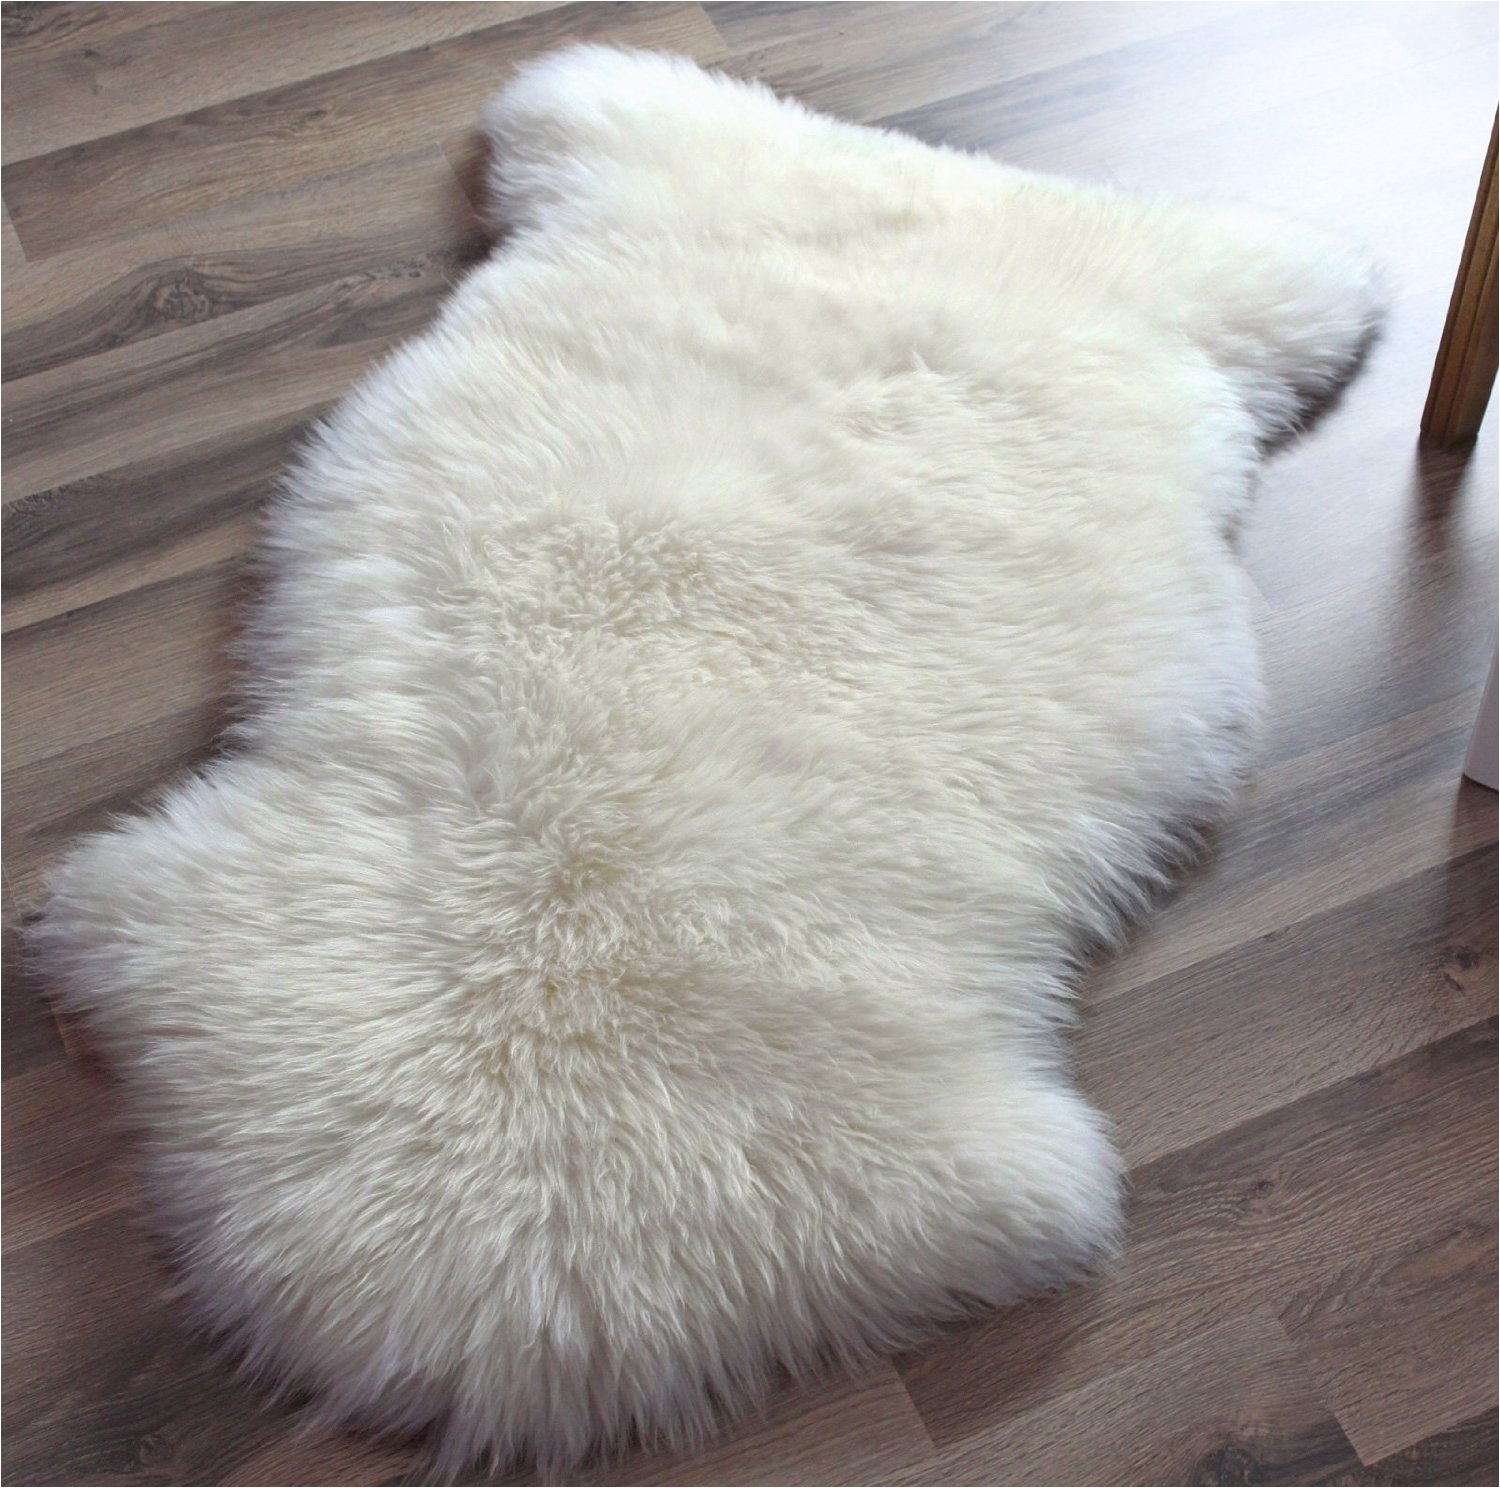 ivory faux sheepskin rug on wooden floor for pretty decoration ideas bear skin with head ikea area fur fake sheepski white decorating round accessories